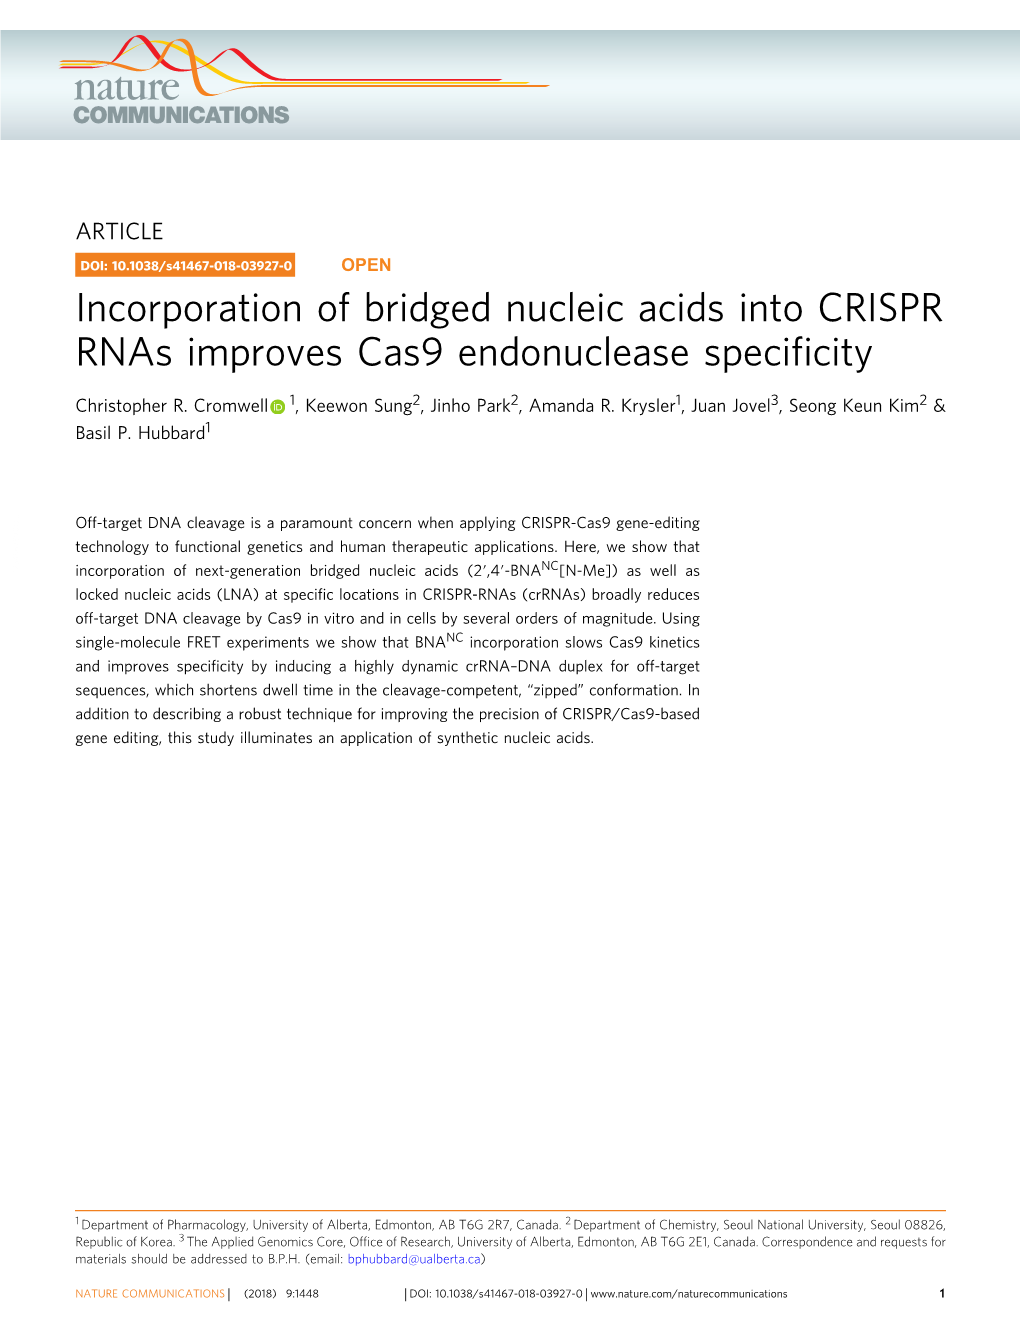 Incorporation of Bridged Nucleic Acids Into CRISPR Rnas Improves Cas9 Endonuclease Speciﬁcity